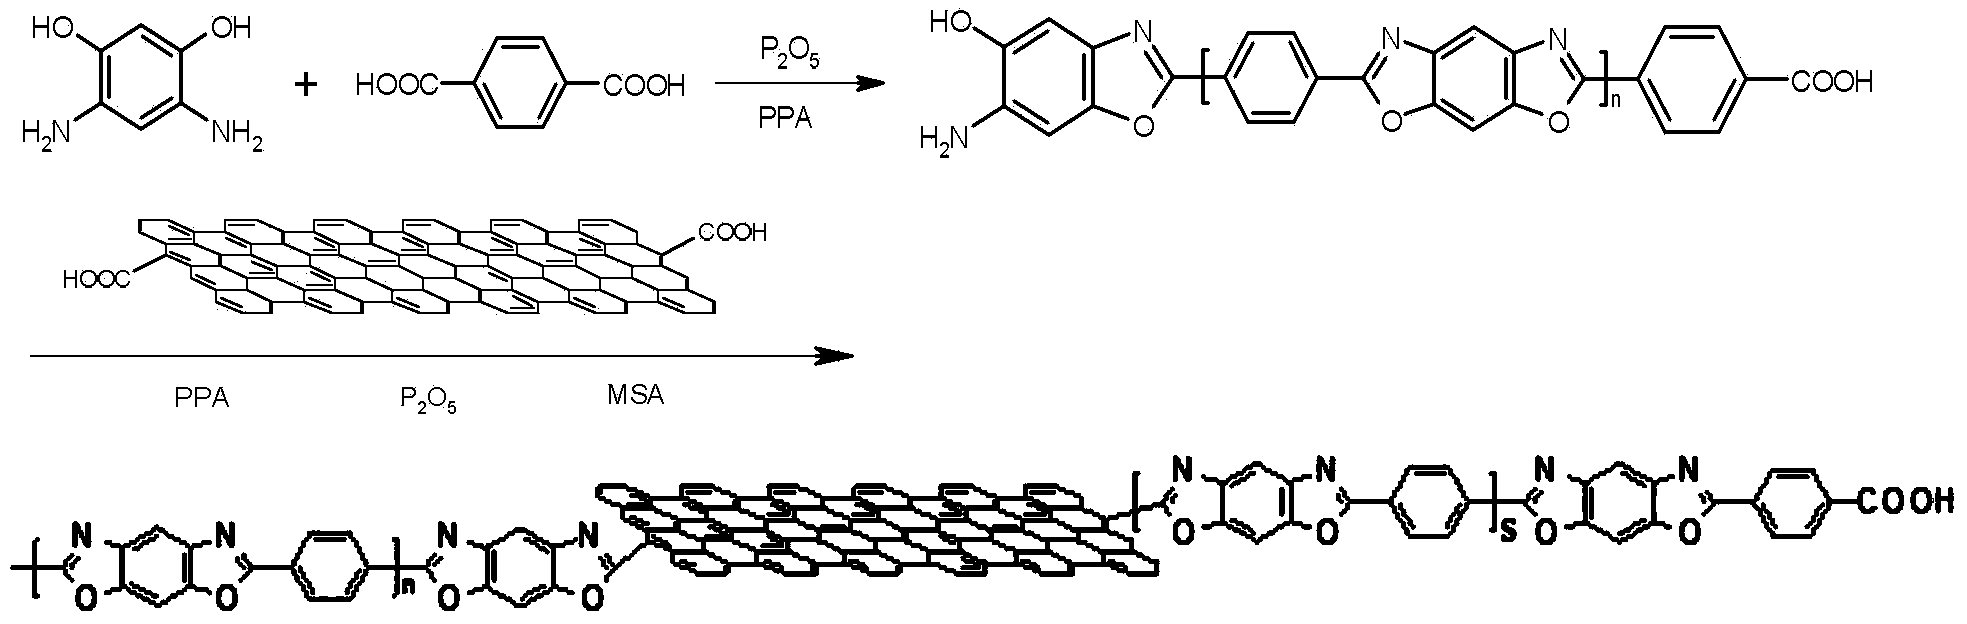 Graphene nanobelt graft modified PBO polymer and preparation method thereof